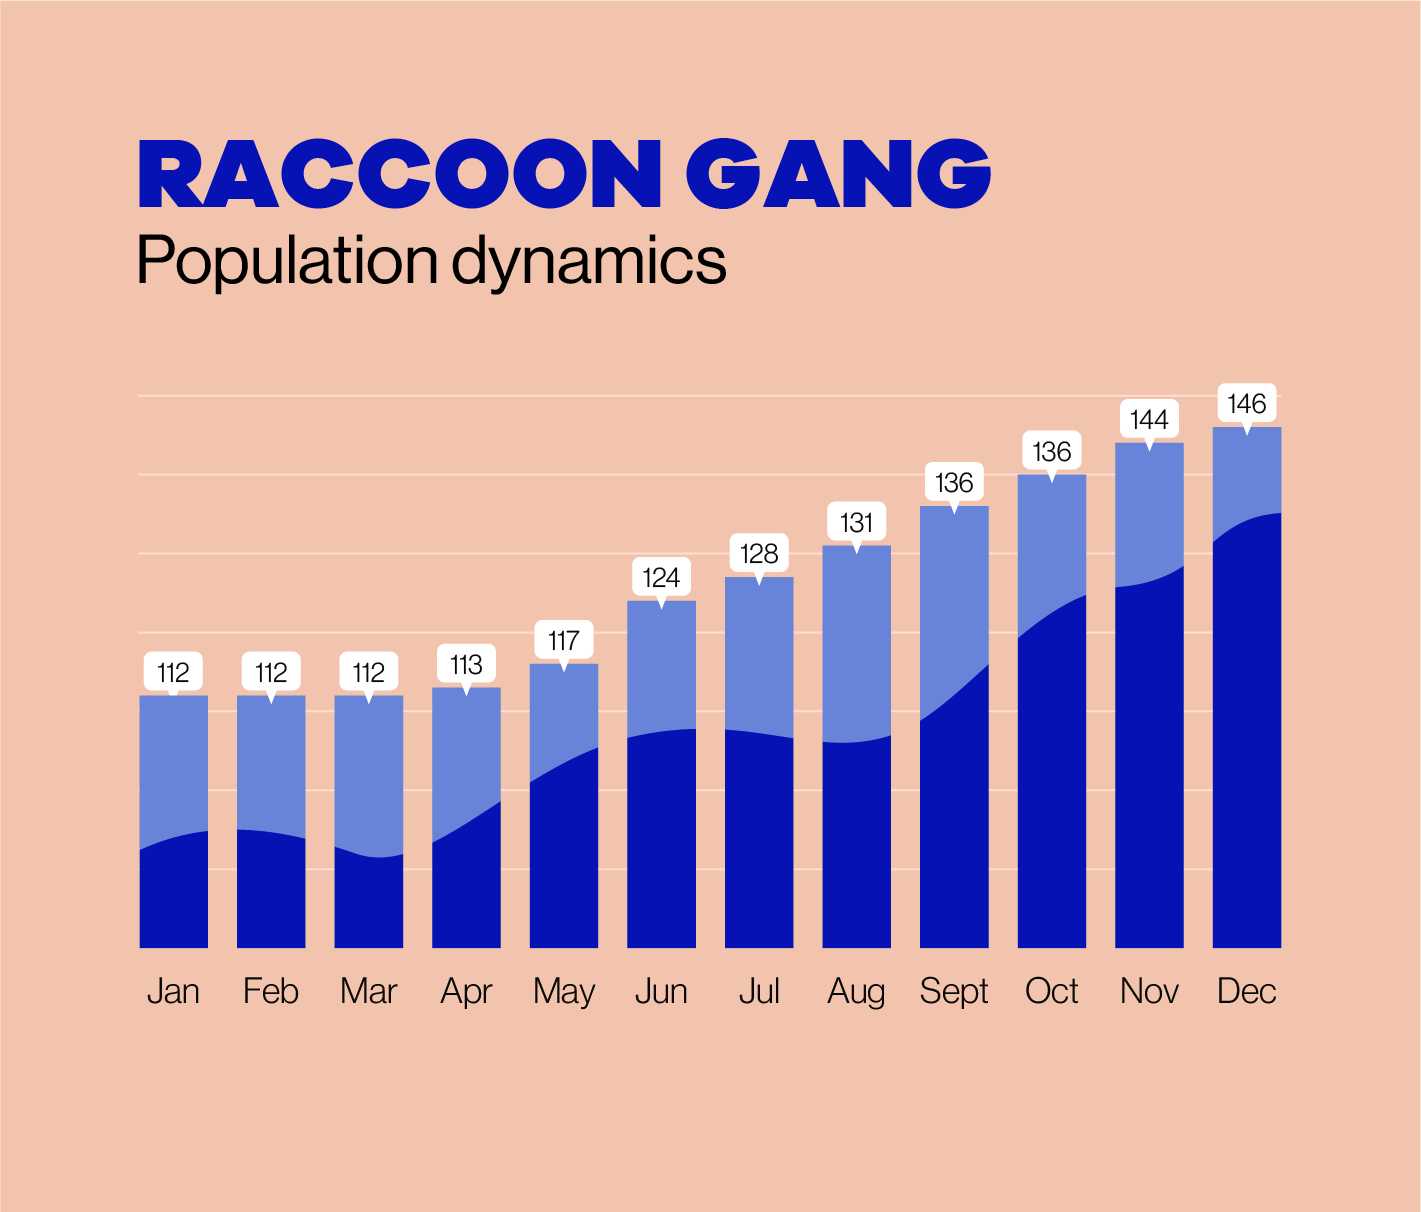 The Raccoon Gang population dynamics